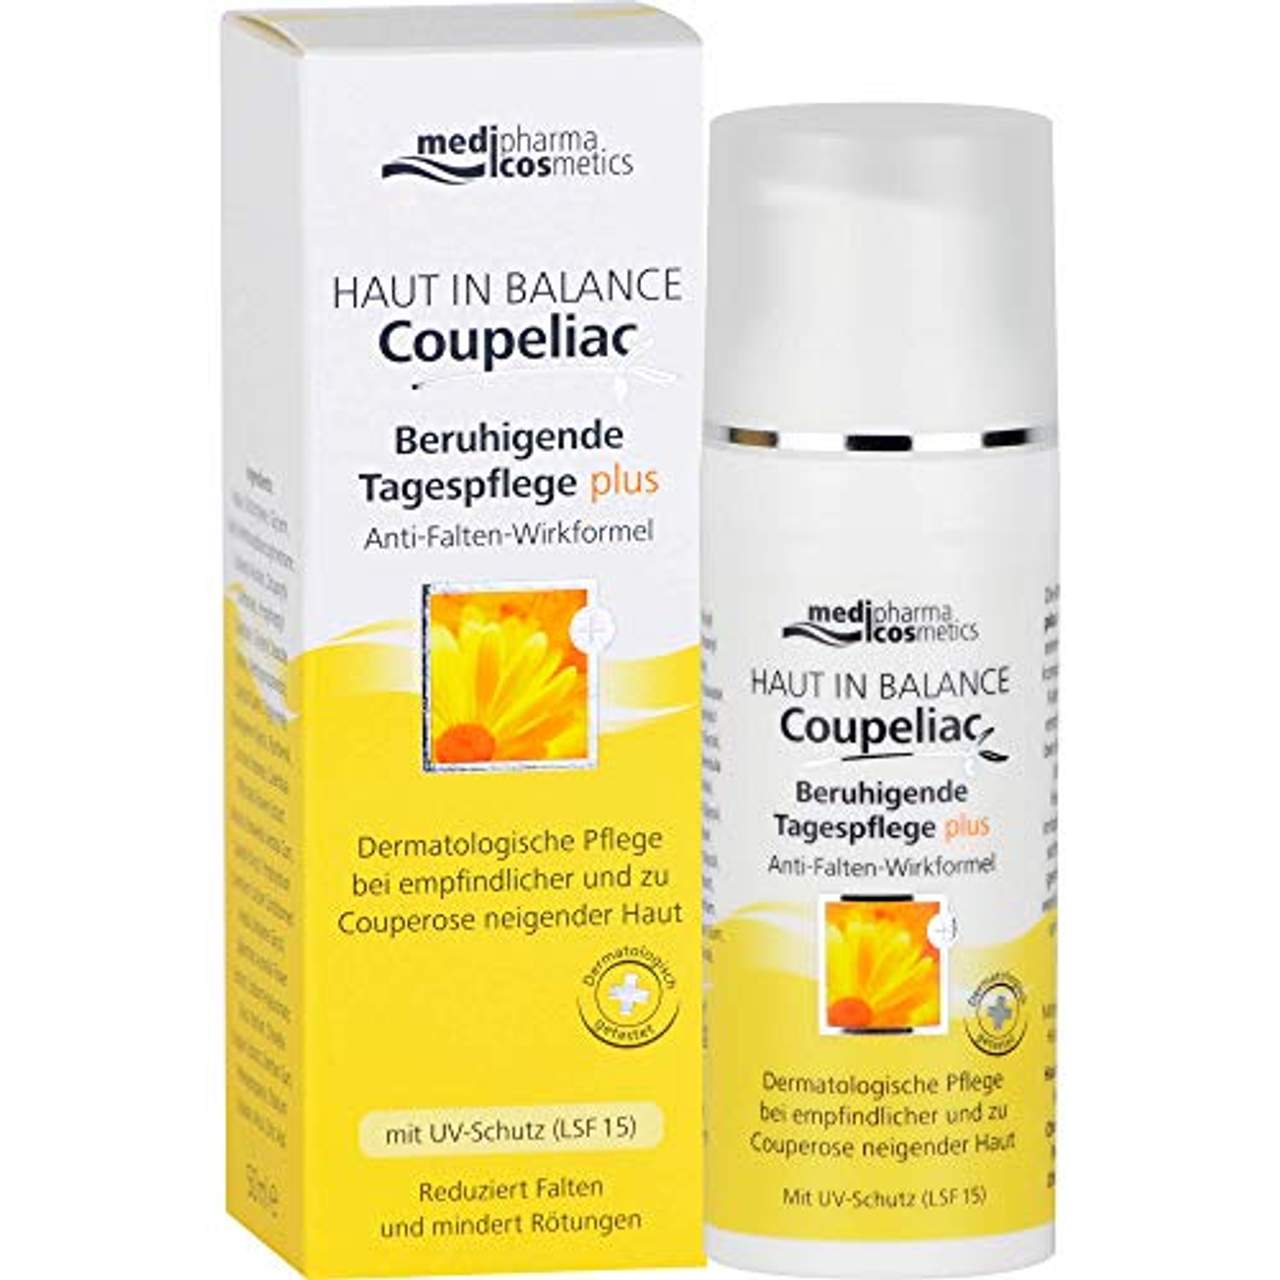 Dr Theiss Naturwaren GmbH medipharma cosmetics Haut in Balance Coupeliac beruhigende